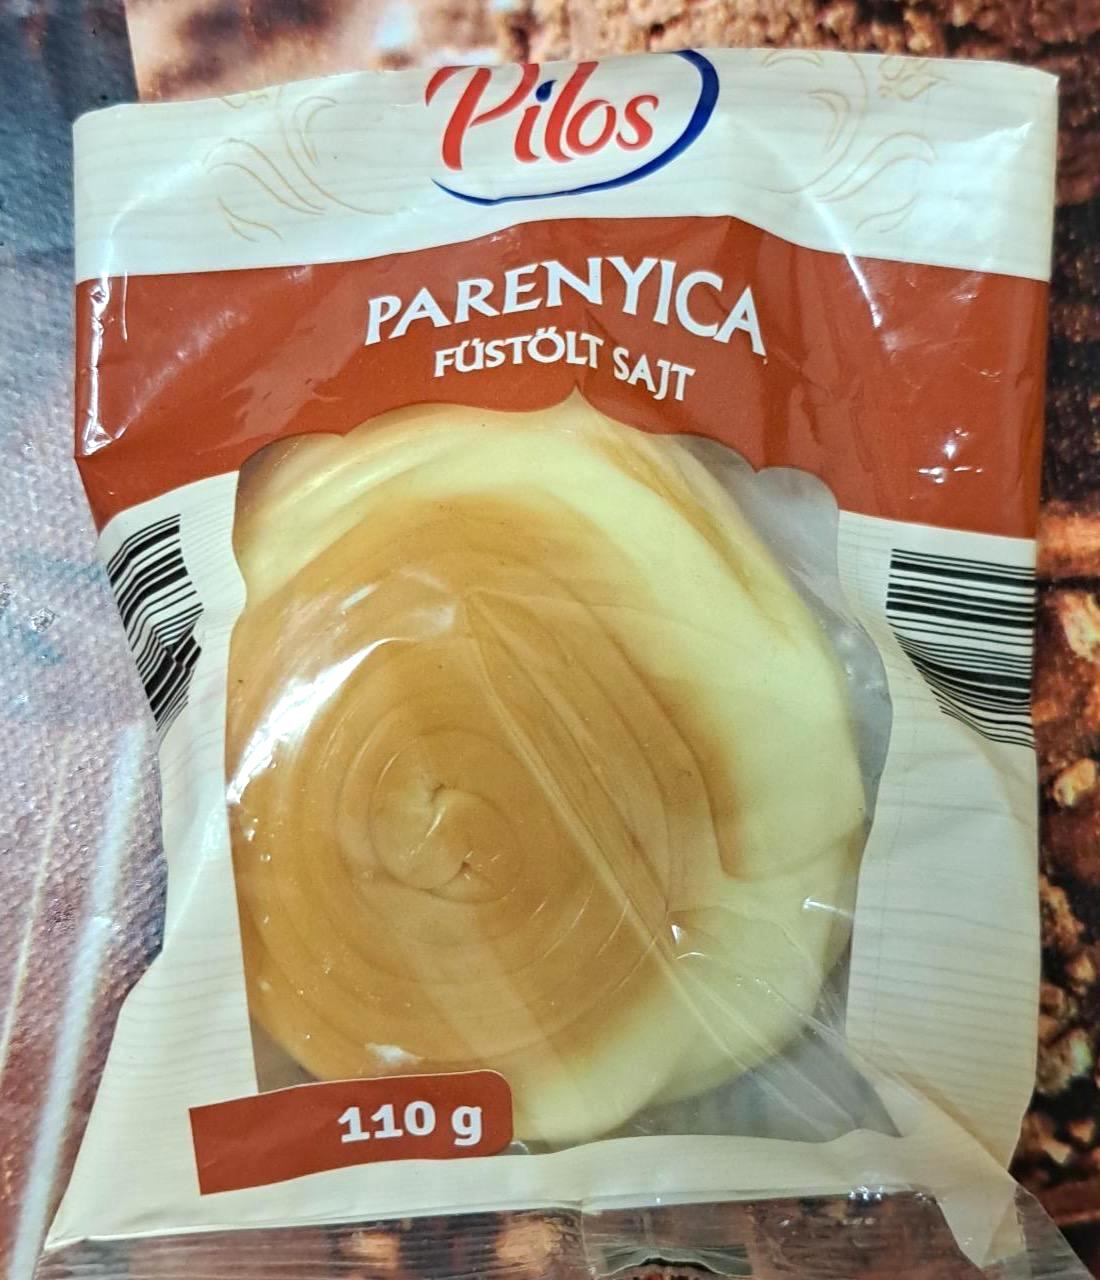 Képek - Parenyica füstölt sajt Pilos